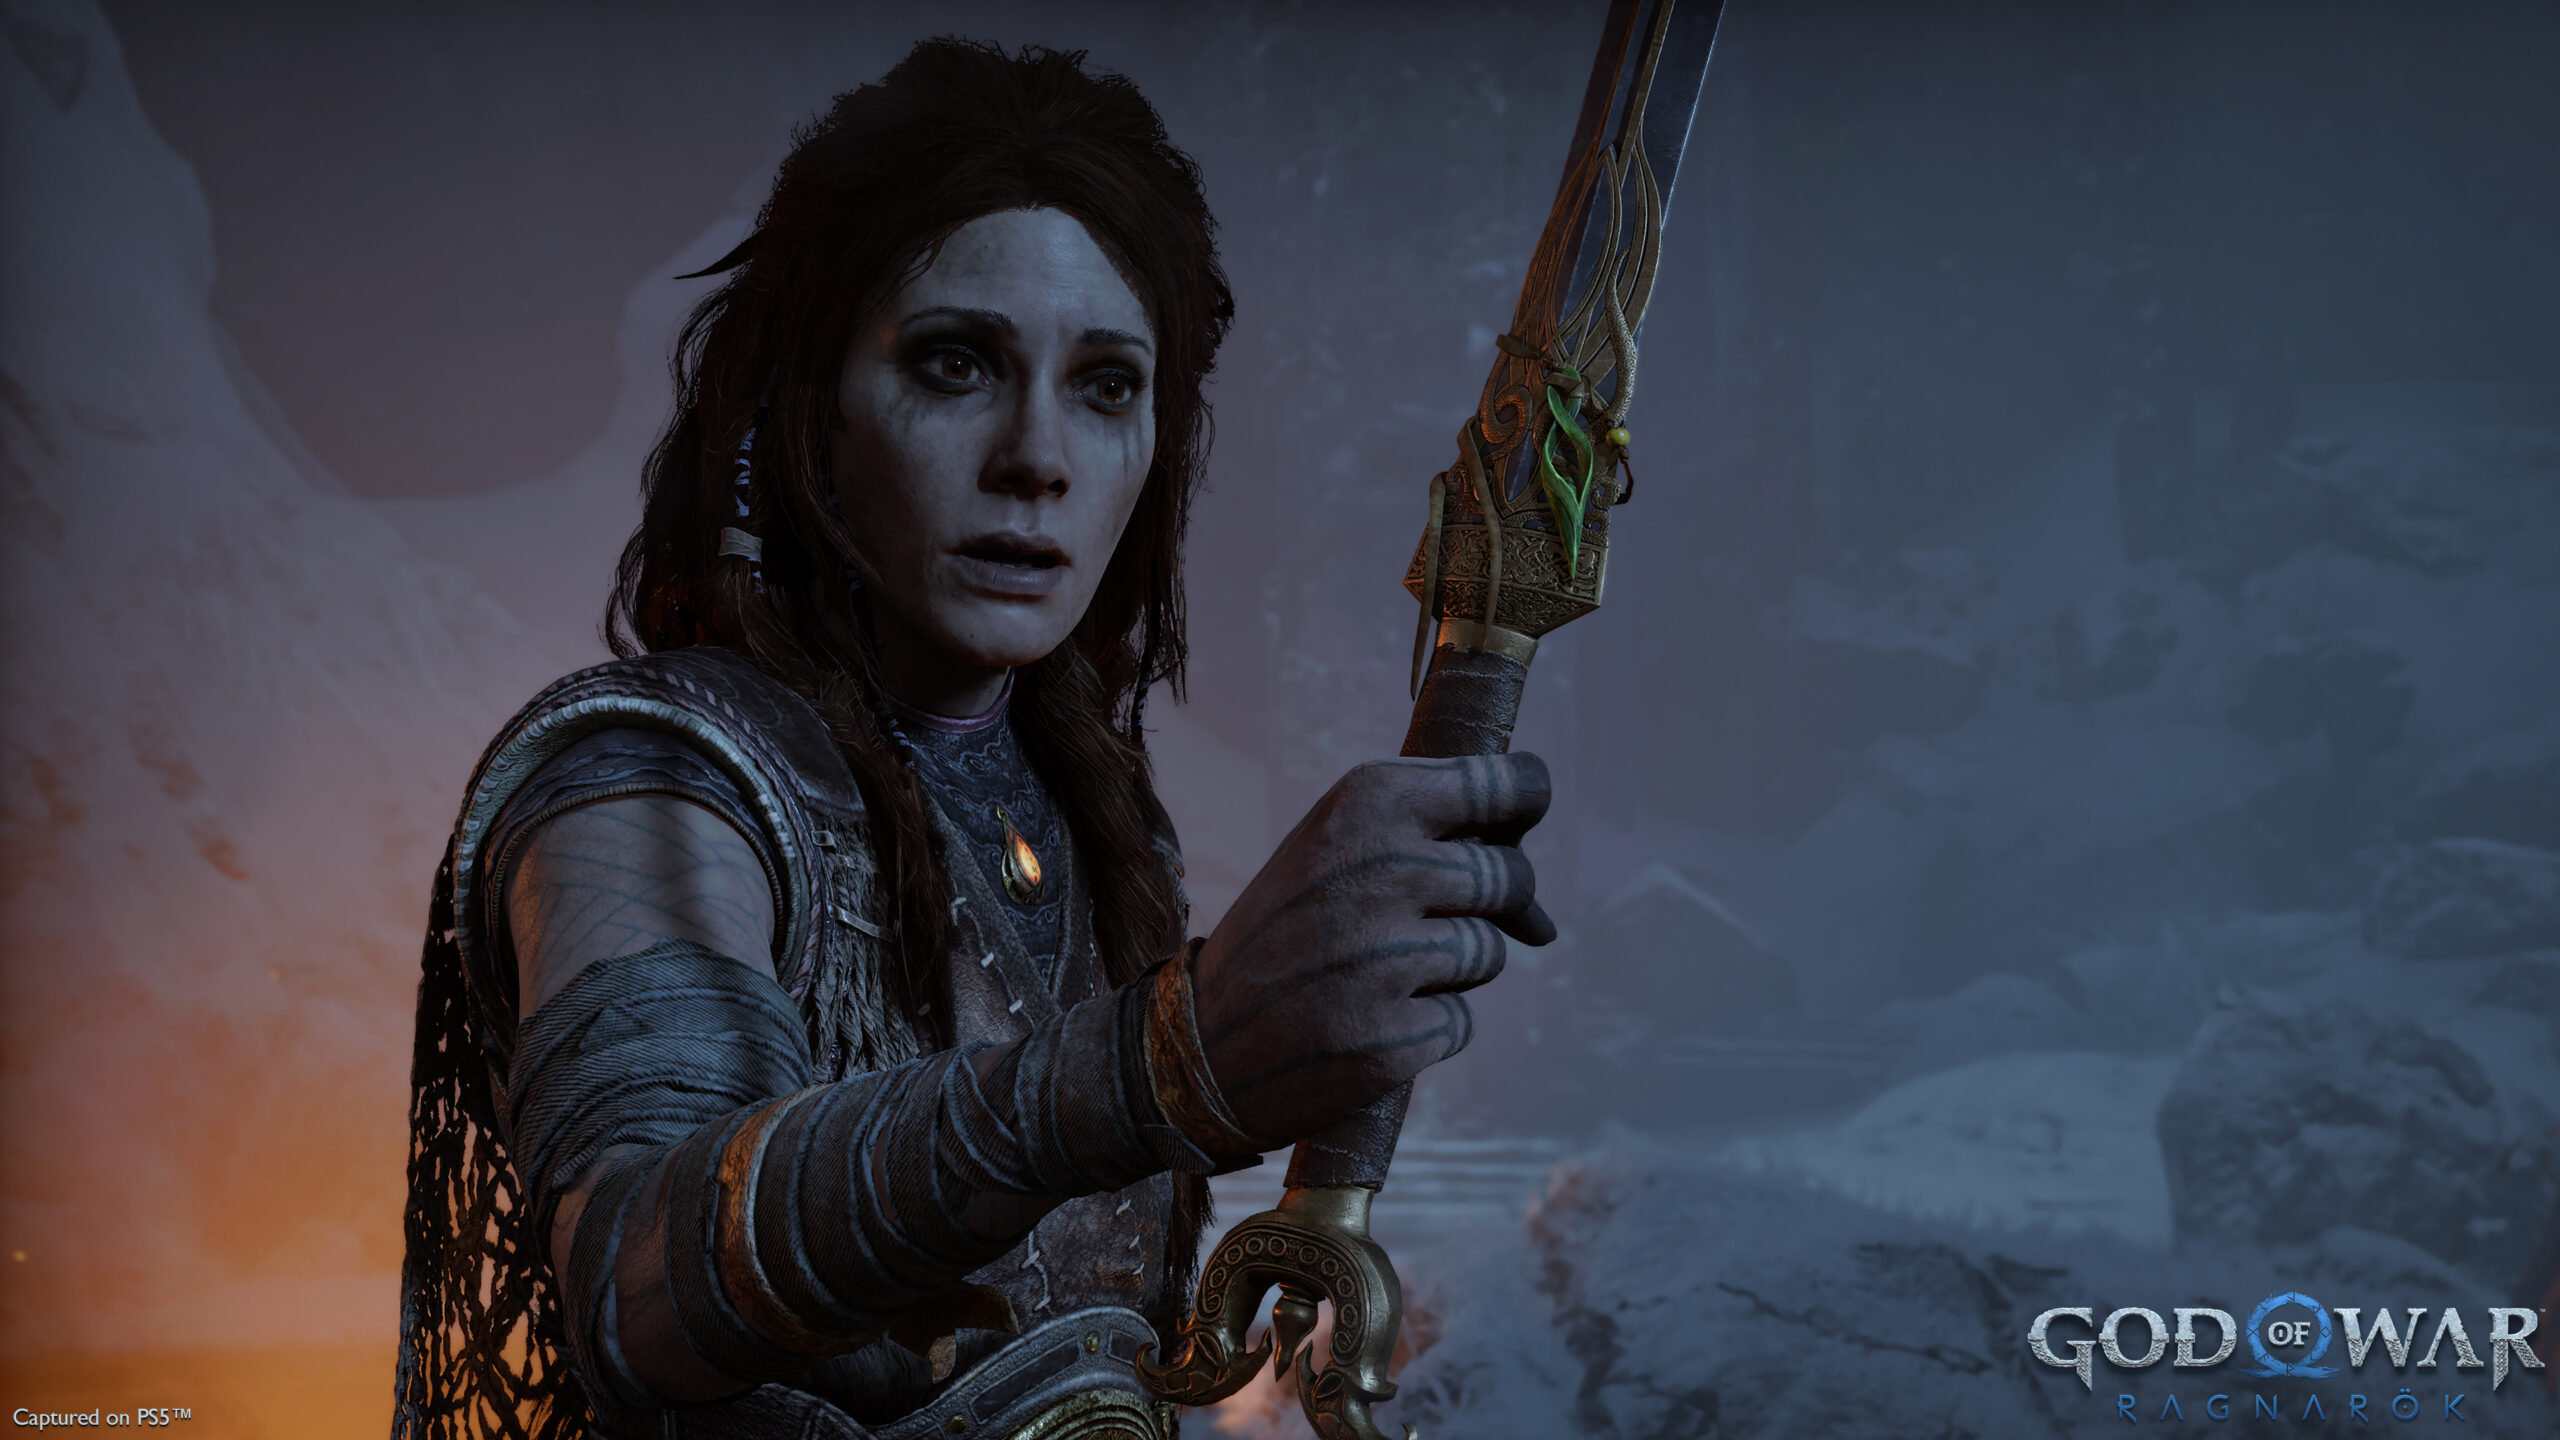 Freya is holding a sword in God of War Ragnarök.